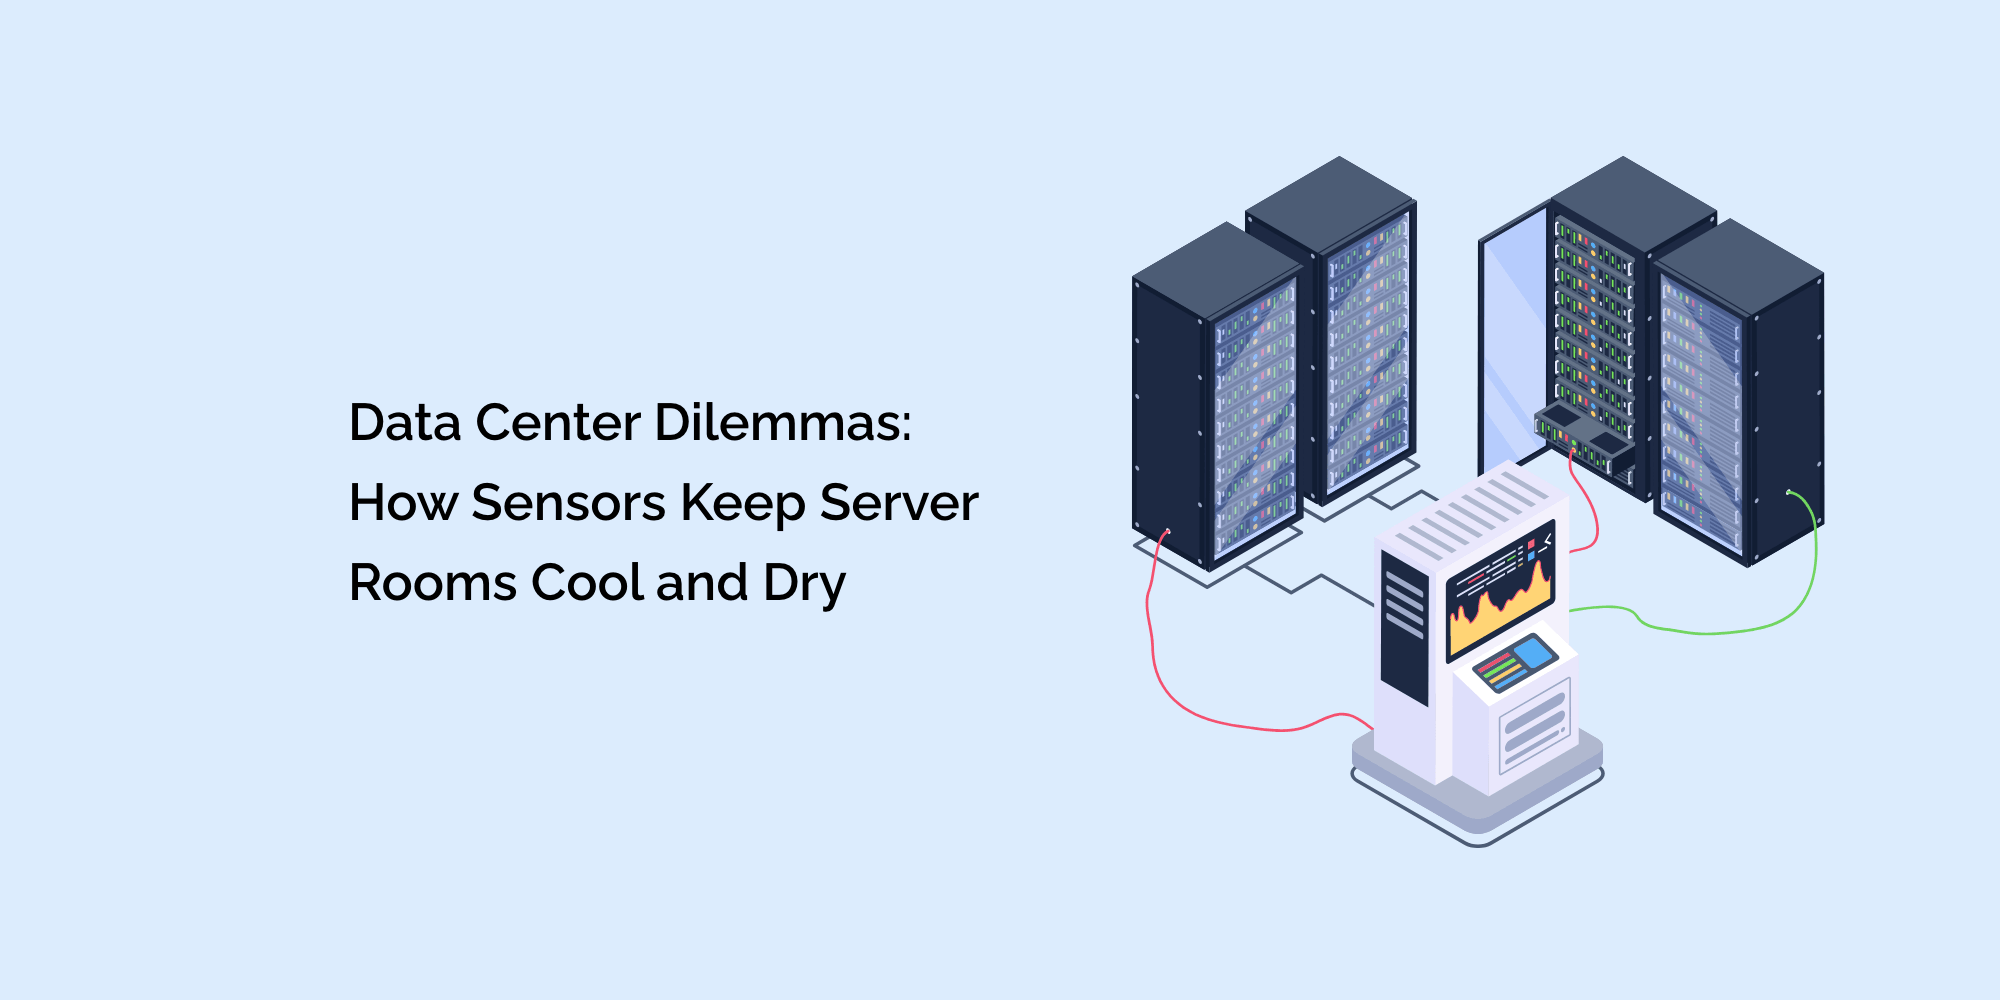 Data Center Dilemmas: How Sensors Keep Server Rooms Cool and Dry